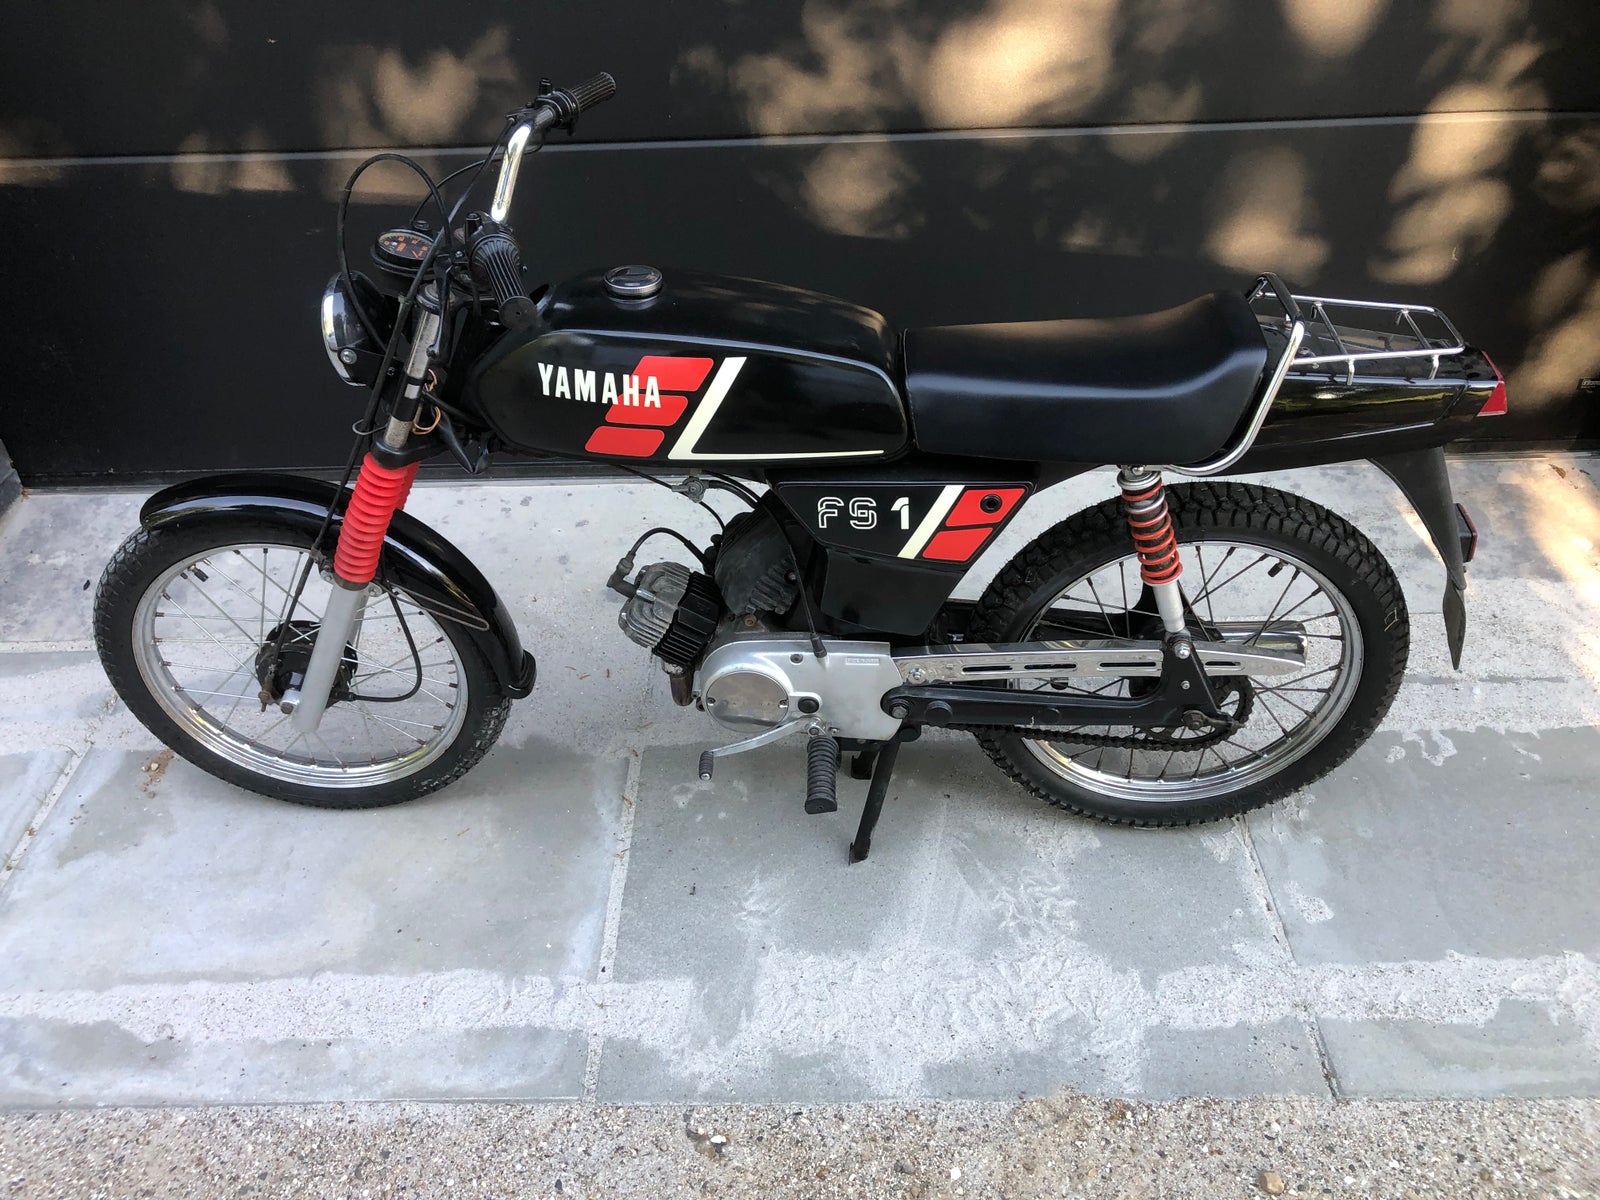 Yamaha Fs 1, 1989, Sort